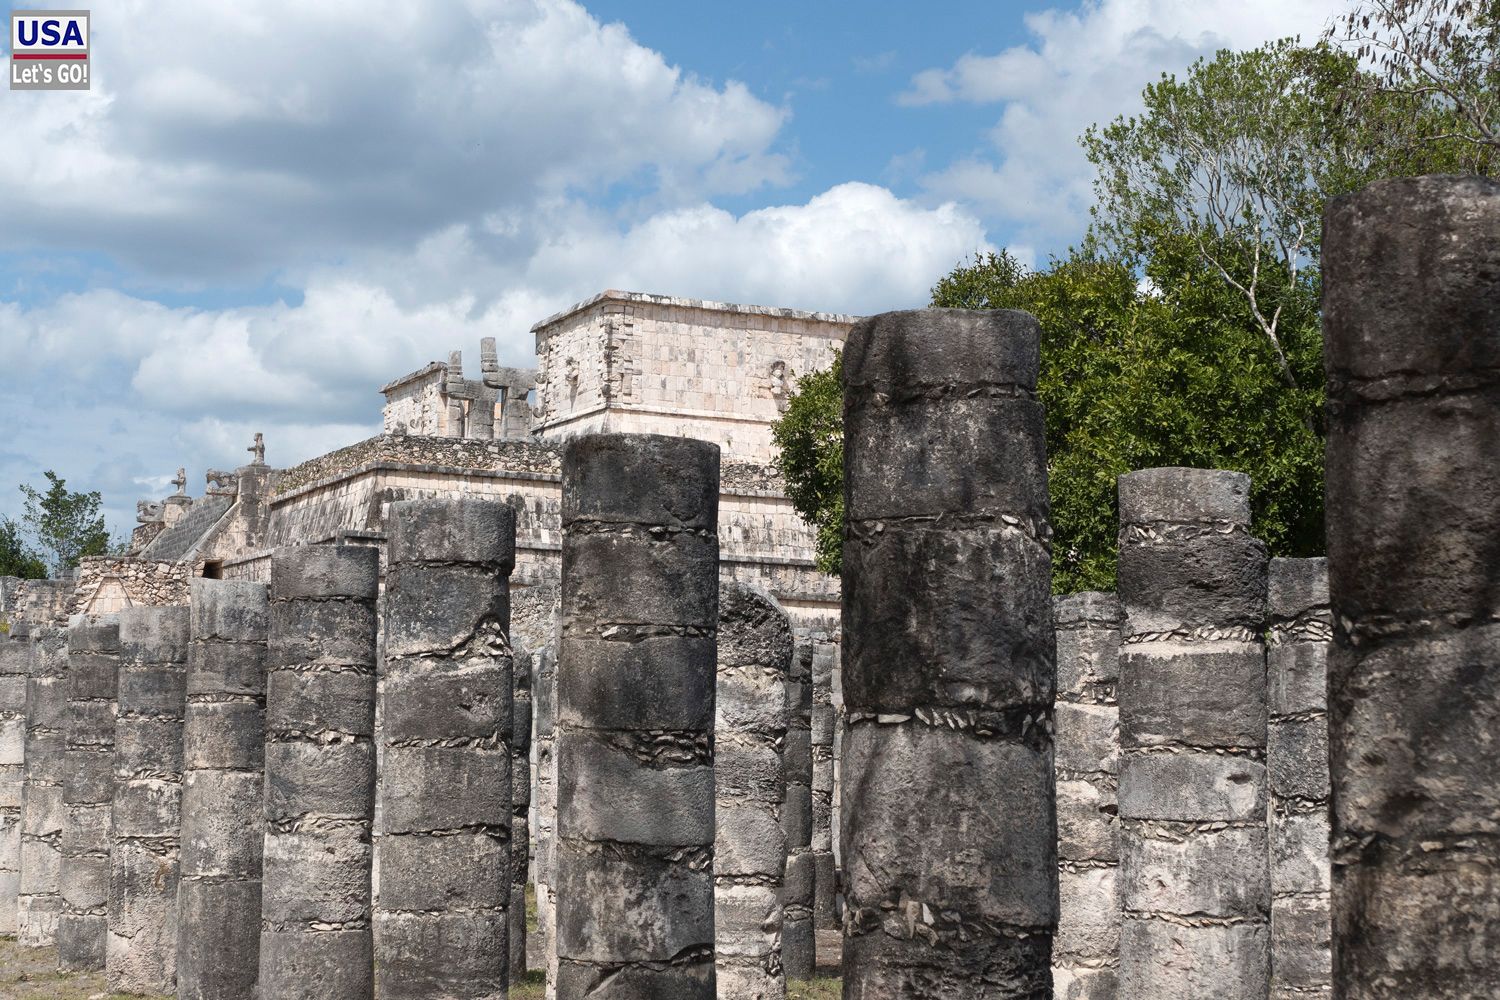 Chichén Itzá Las Mil Columnas